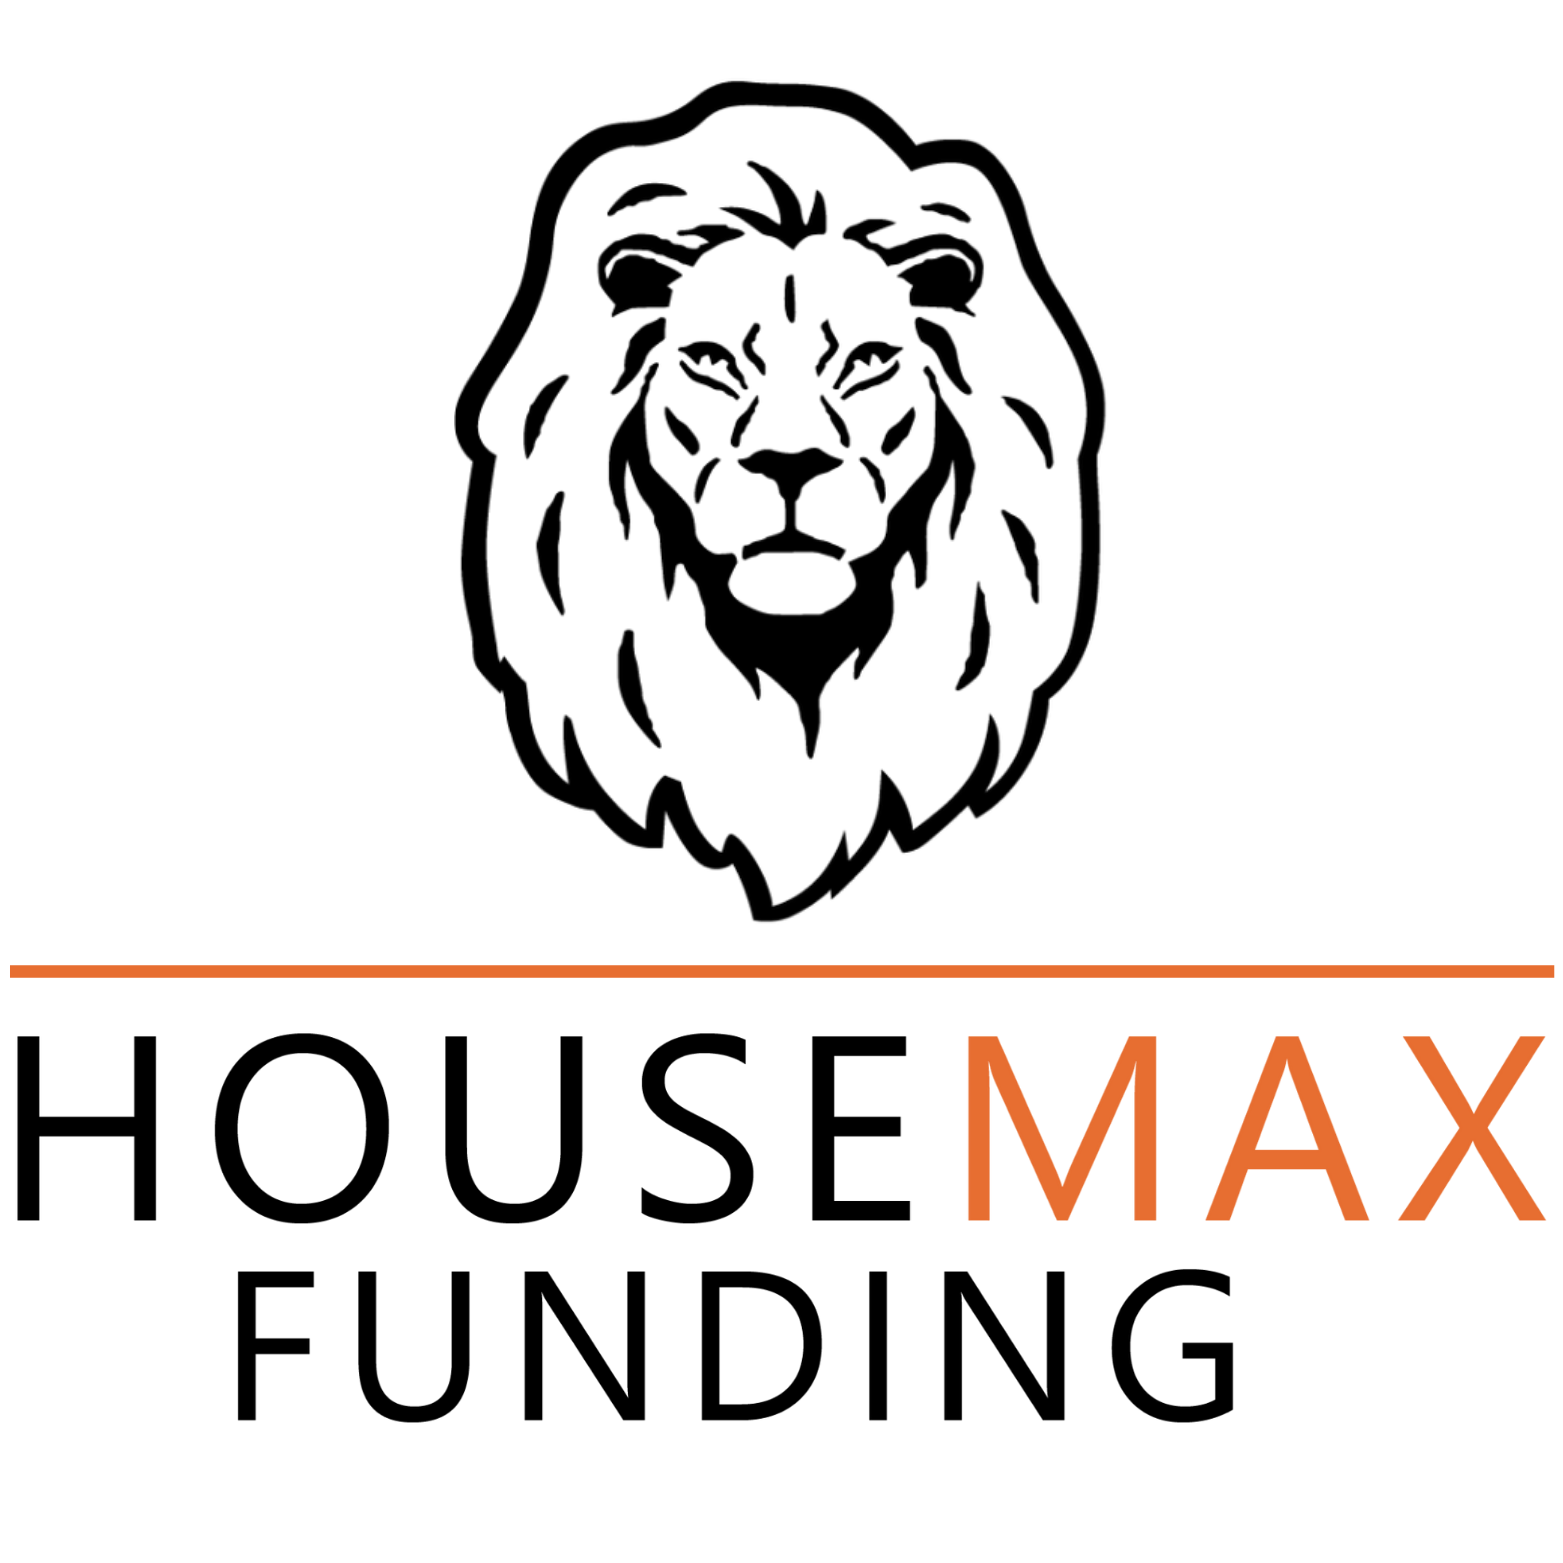 HouseMax Funding Logo